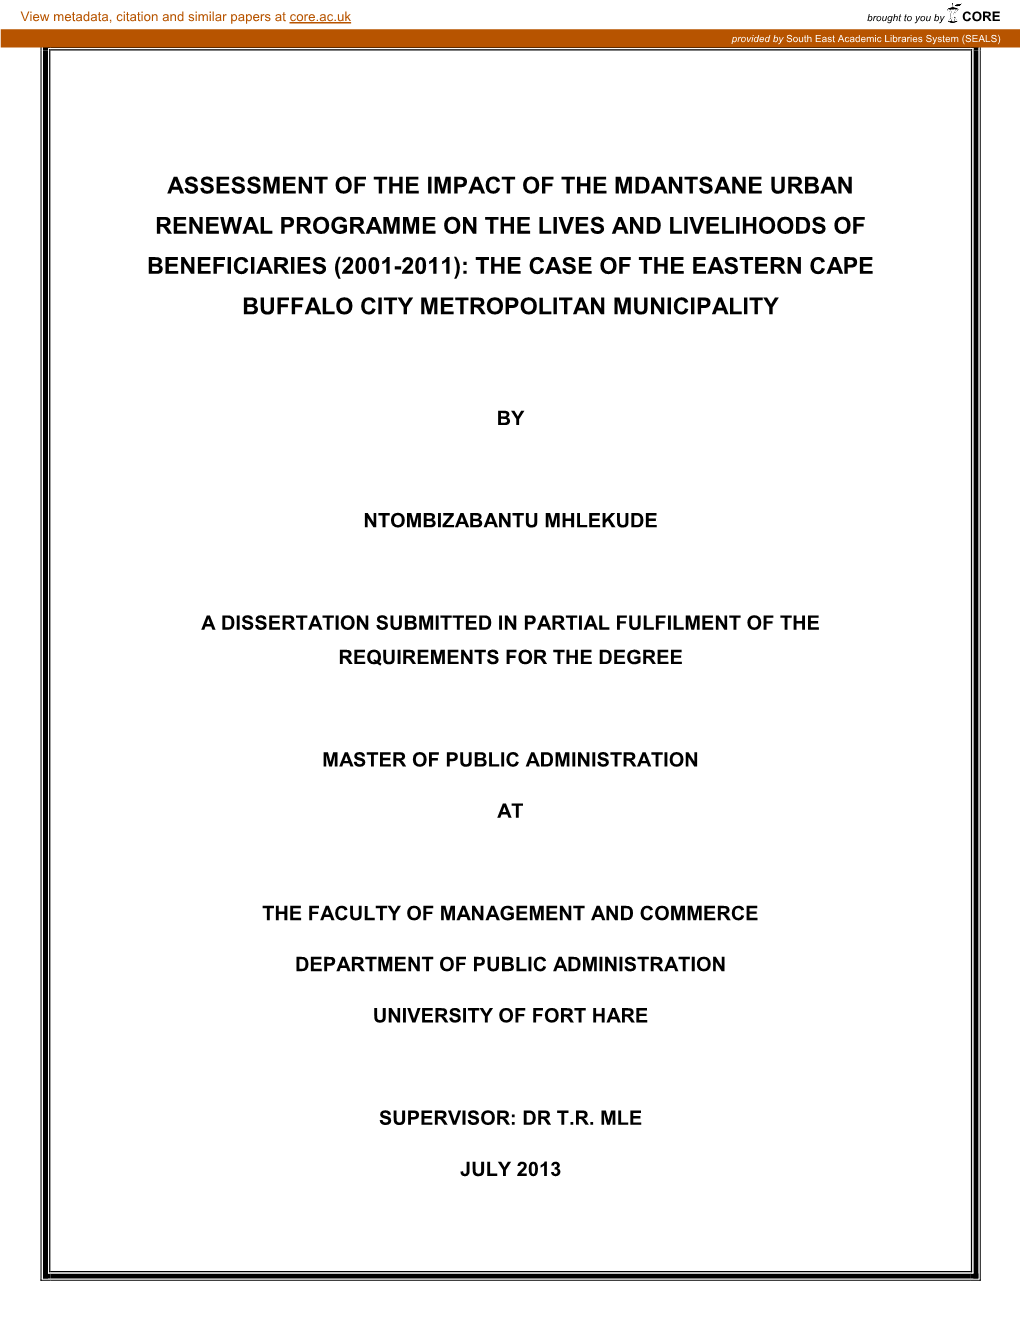 Assessment of the Impact of the Mdantsane Urban